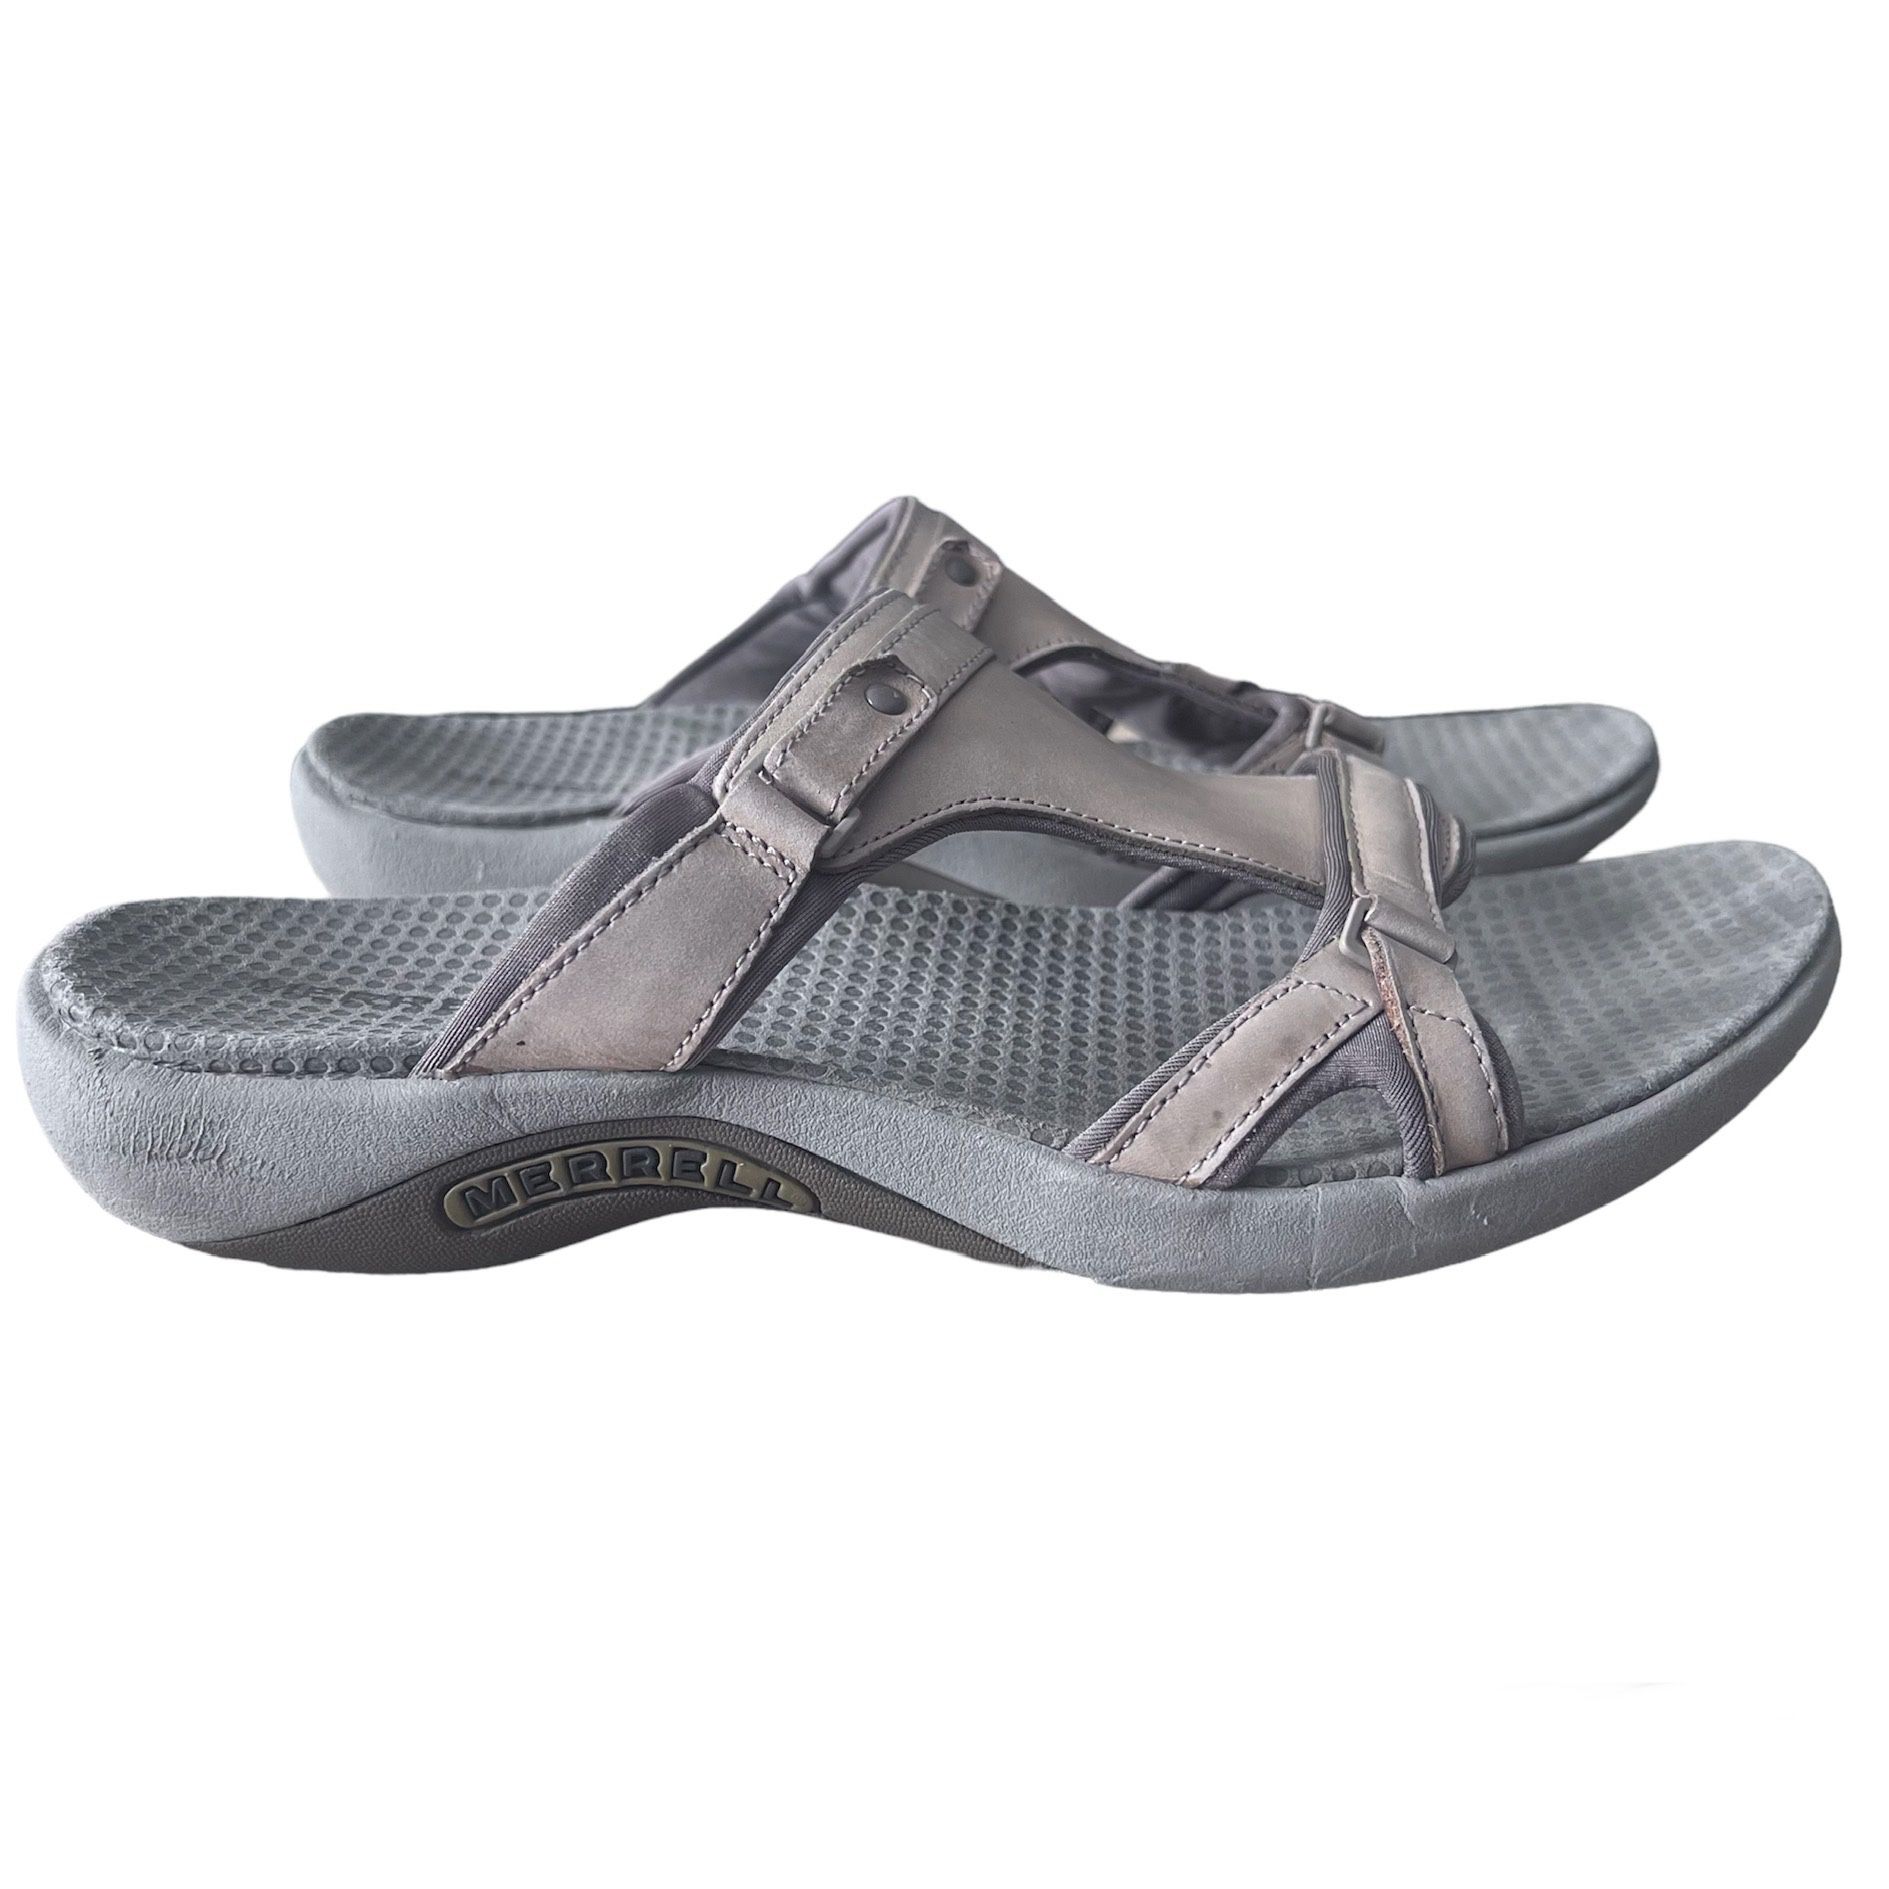 Merrell Glade Women's Sport Sandals US Sz 10 Tan Leather Slip on Shoes EUC